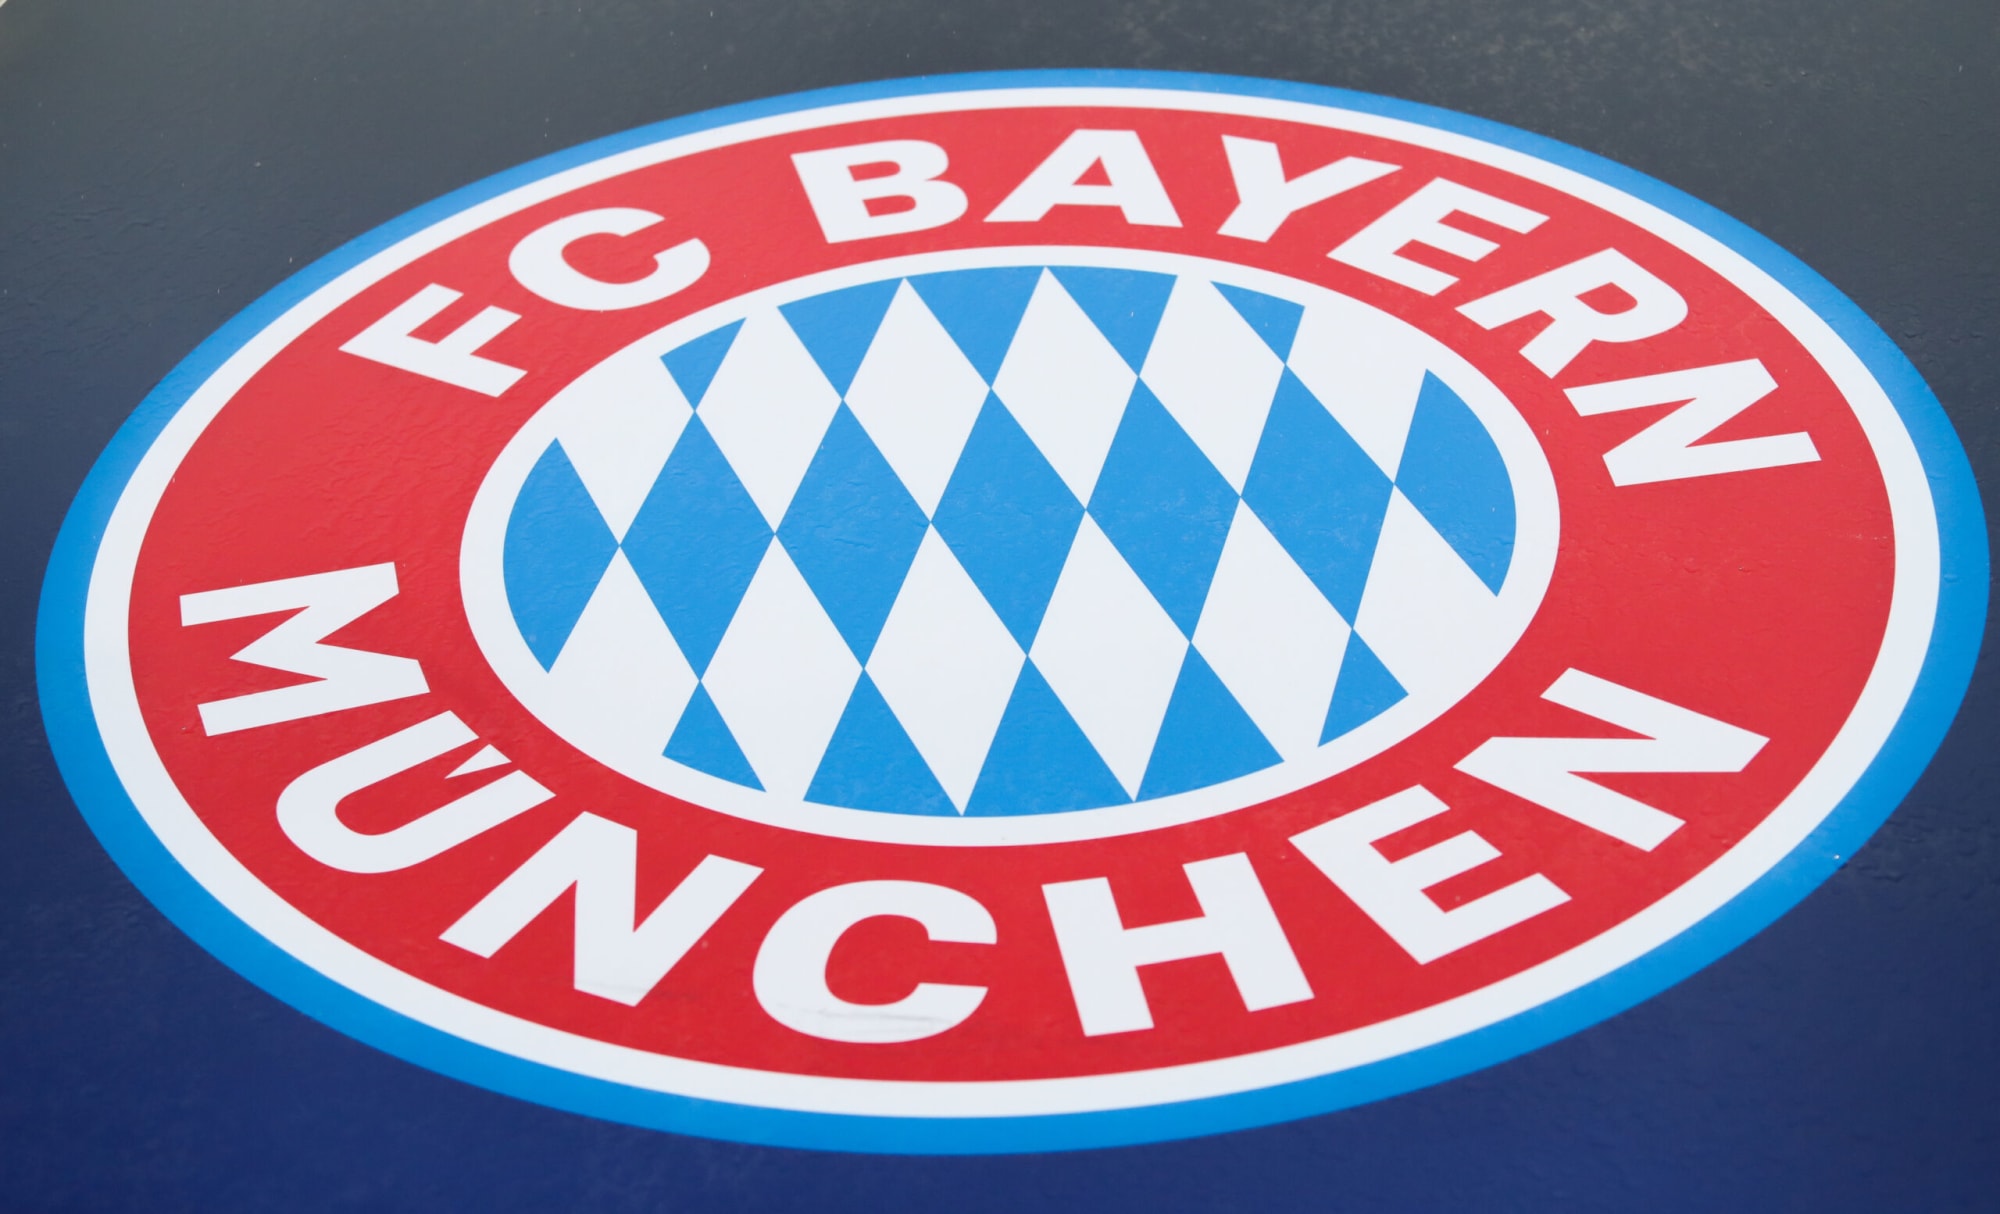 Bayern Munich set to face Premier League clubs in pre-season